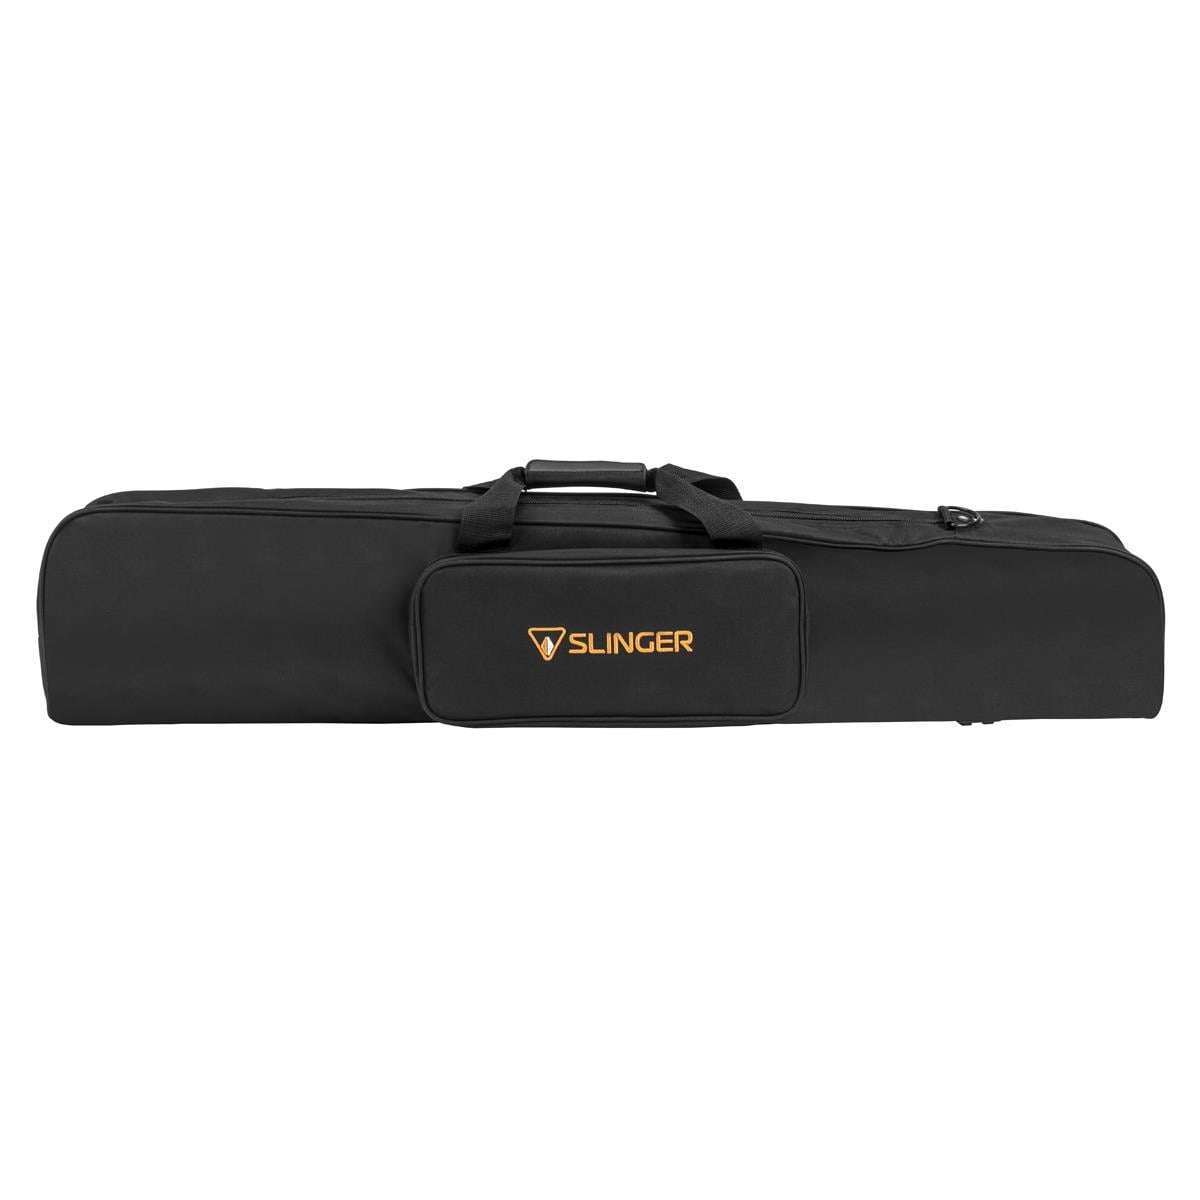 2x Travel Sports Equipment Bag Double Zipper Puller Carry Bag 100cm 